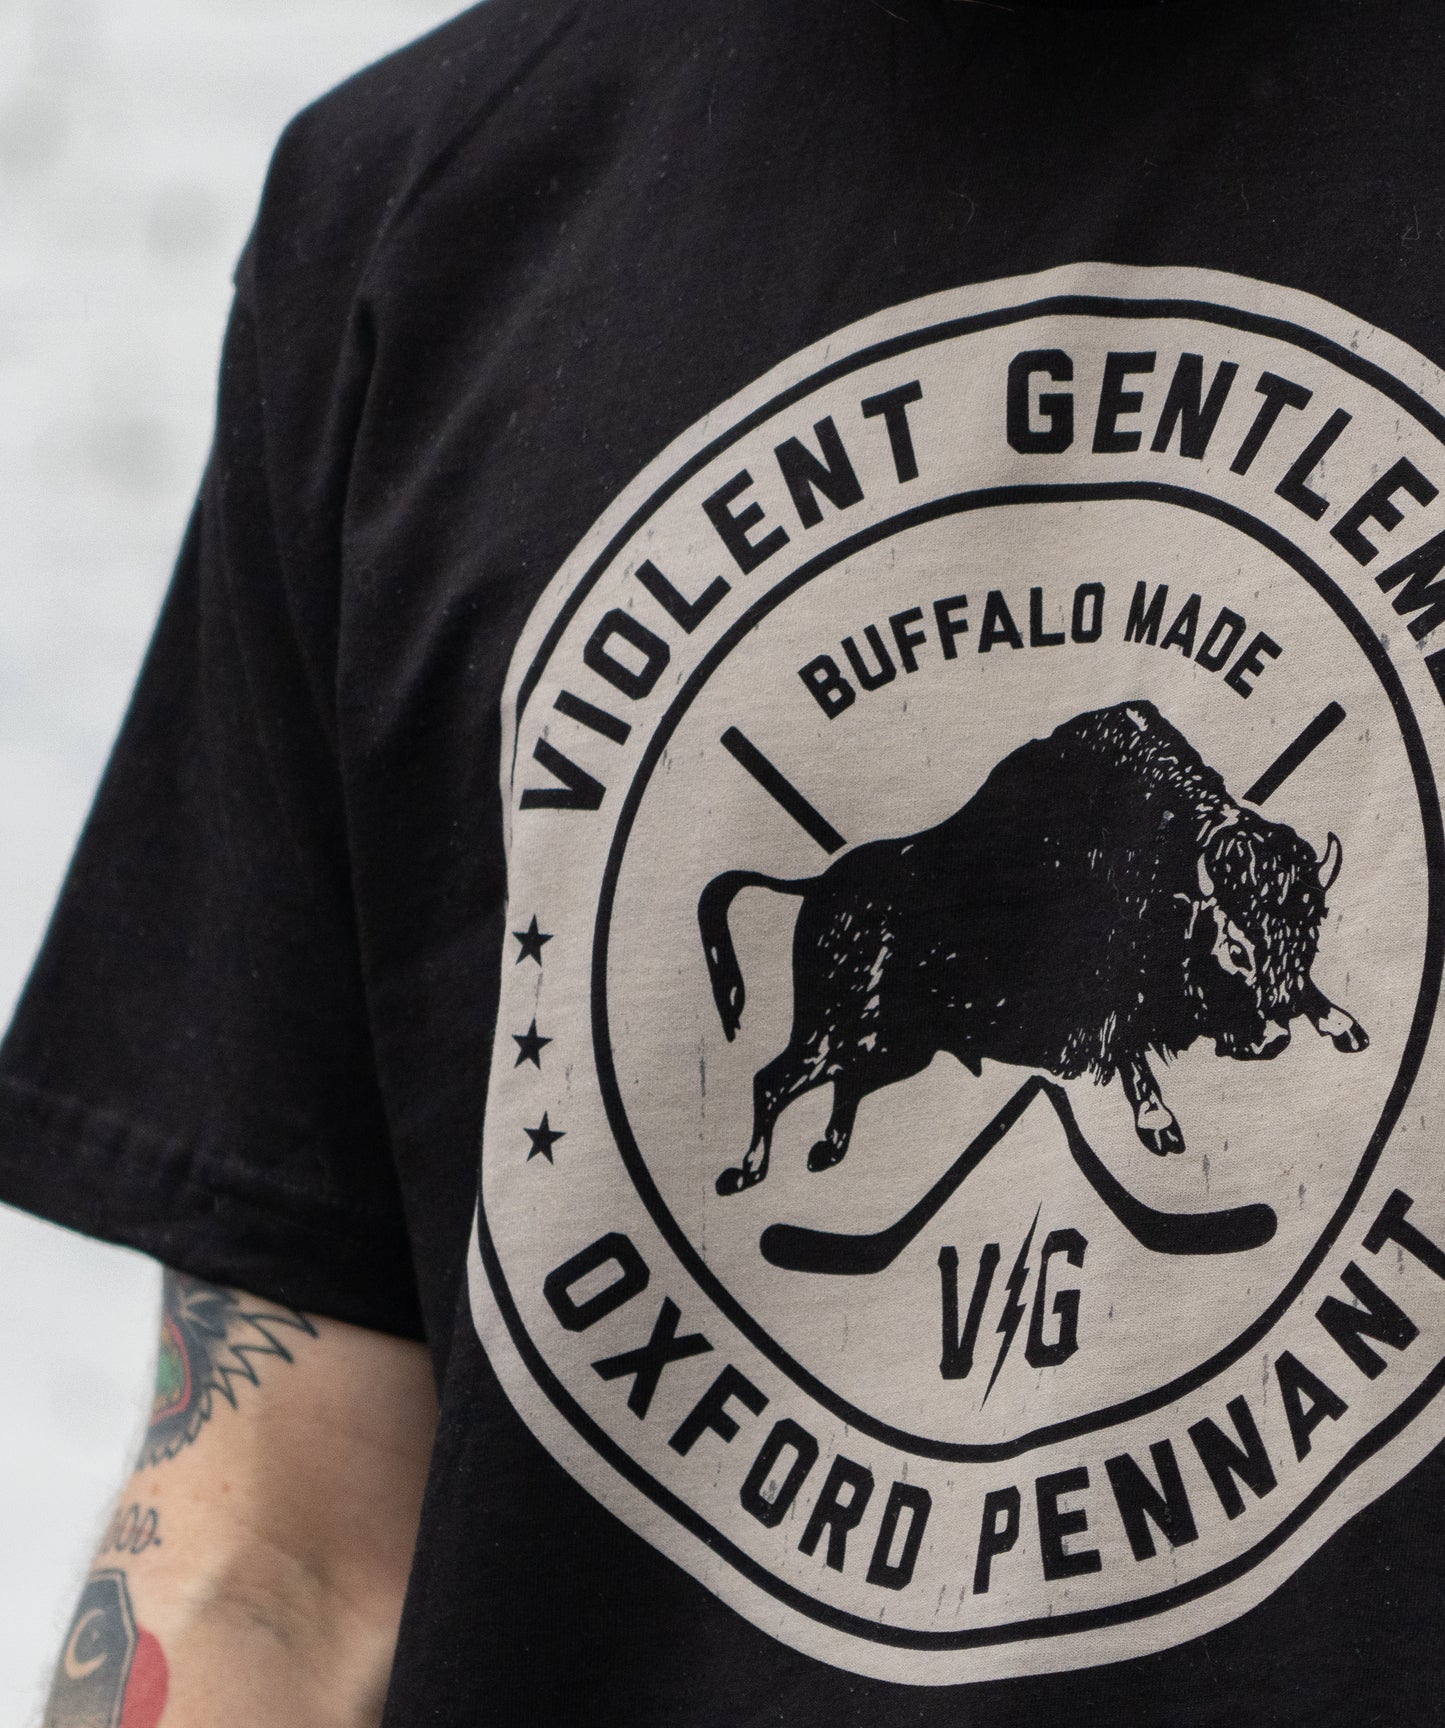 Violent Gentlemen Hockey Club T-Shirt